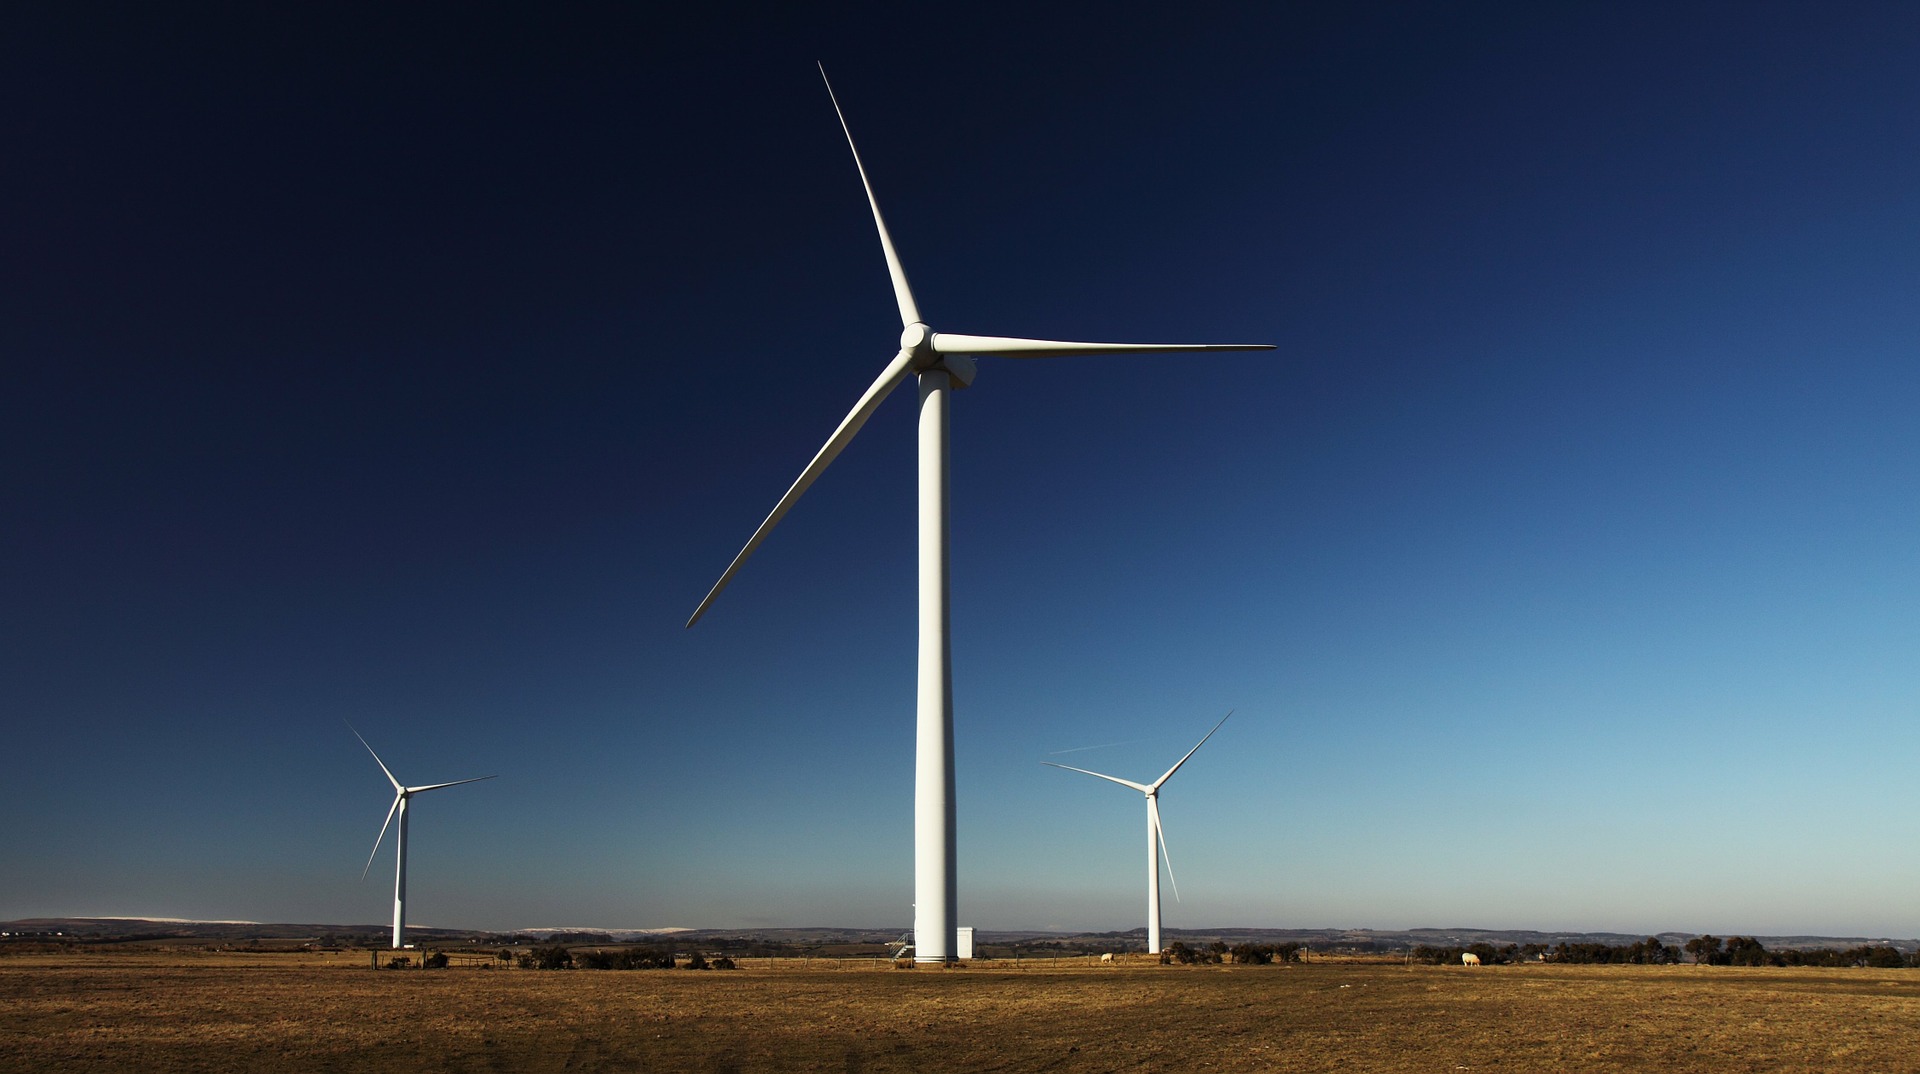 a row of wind turbines